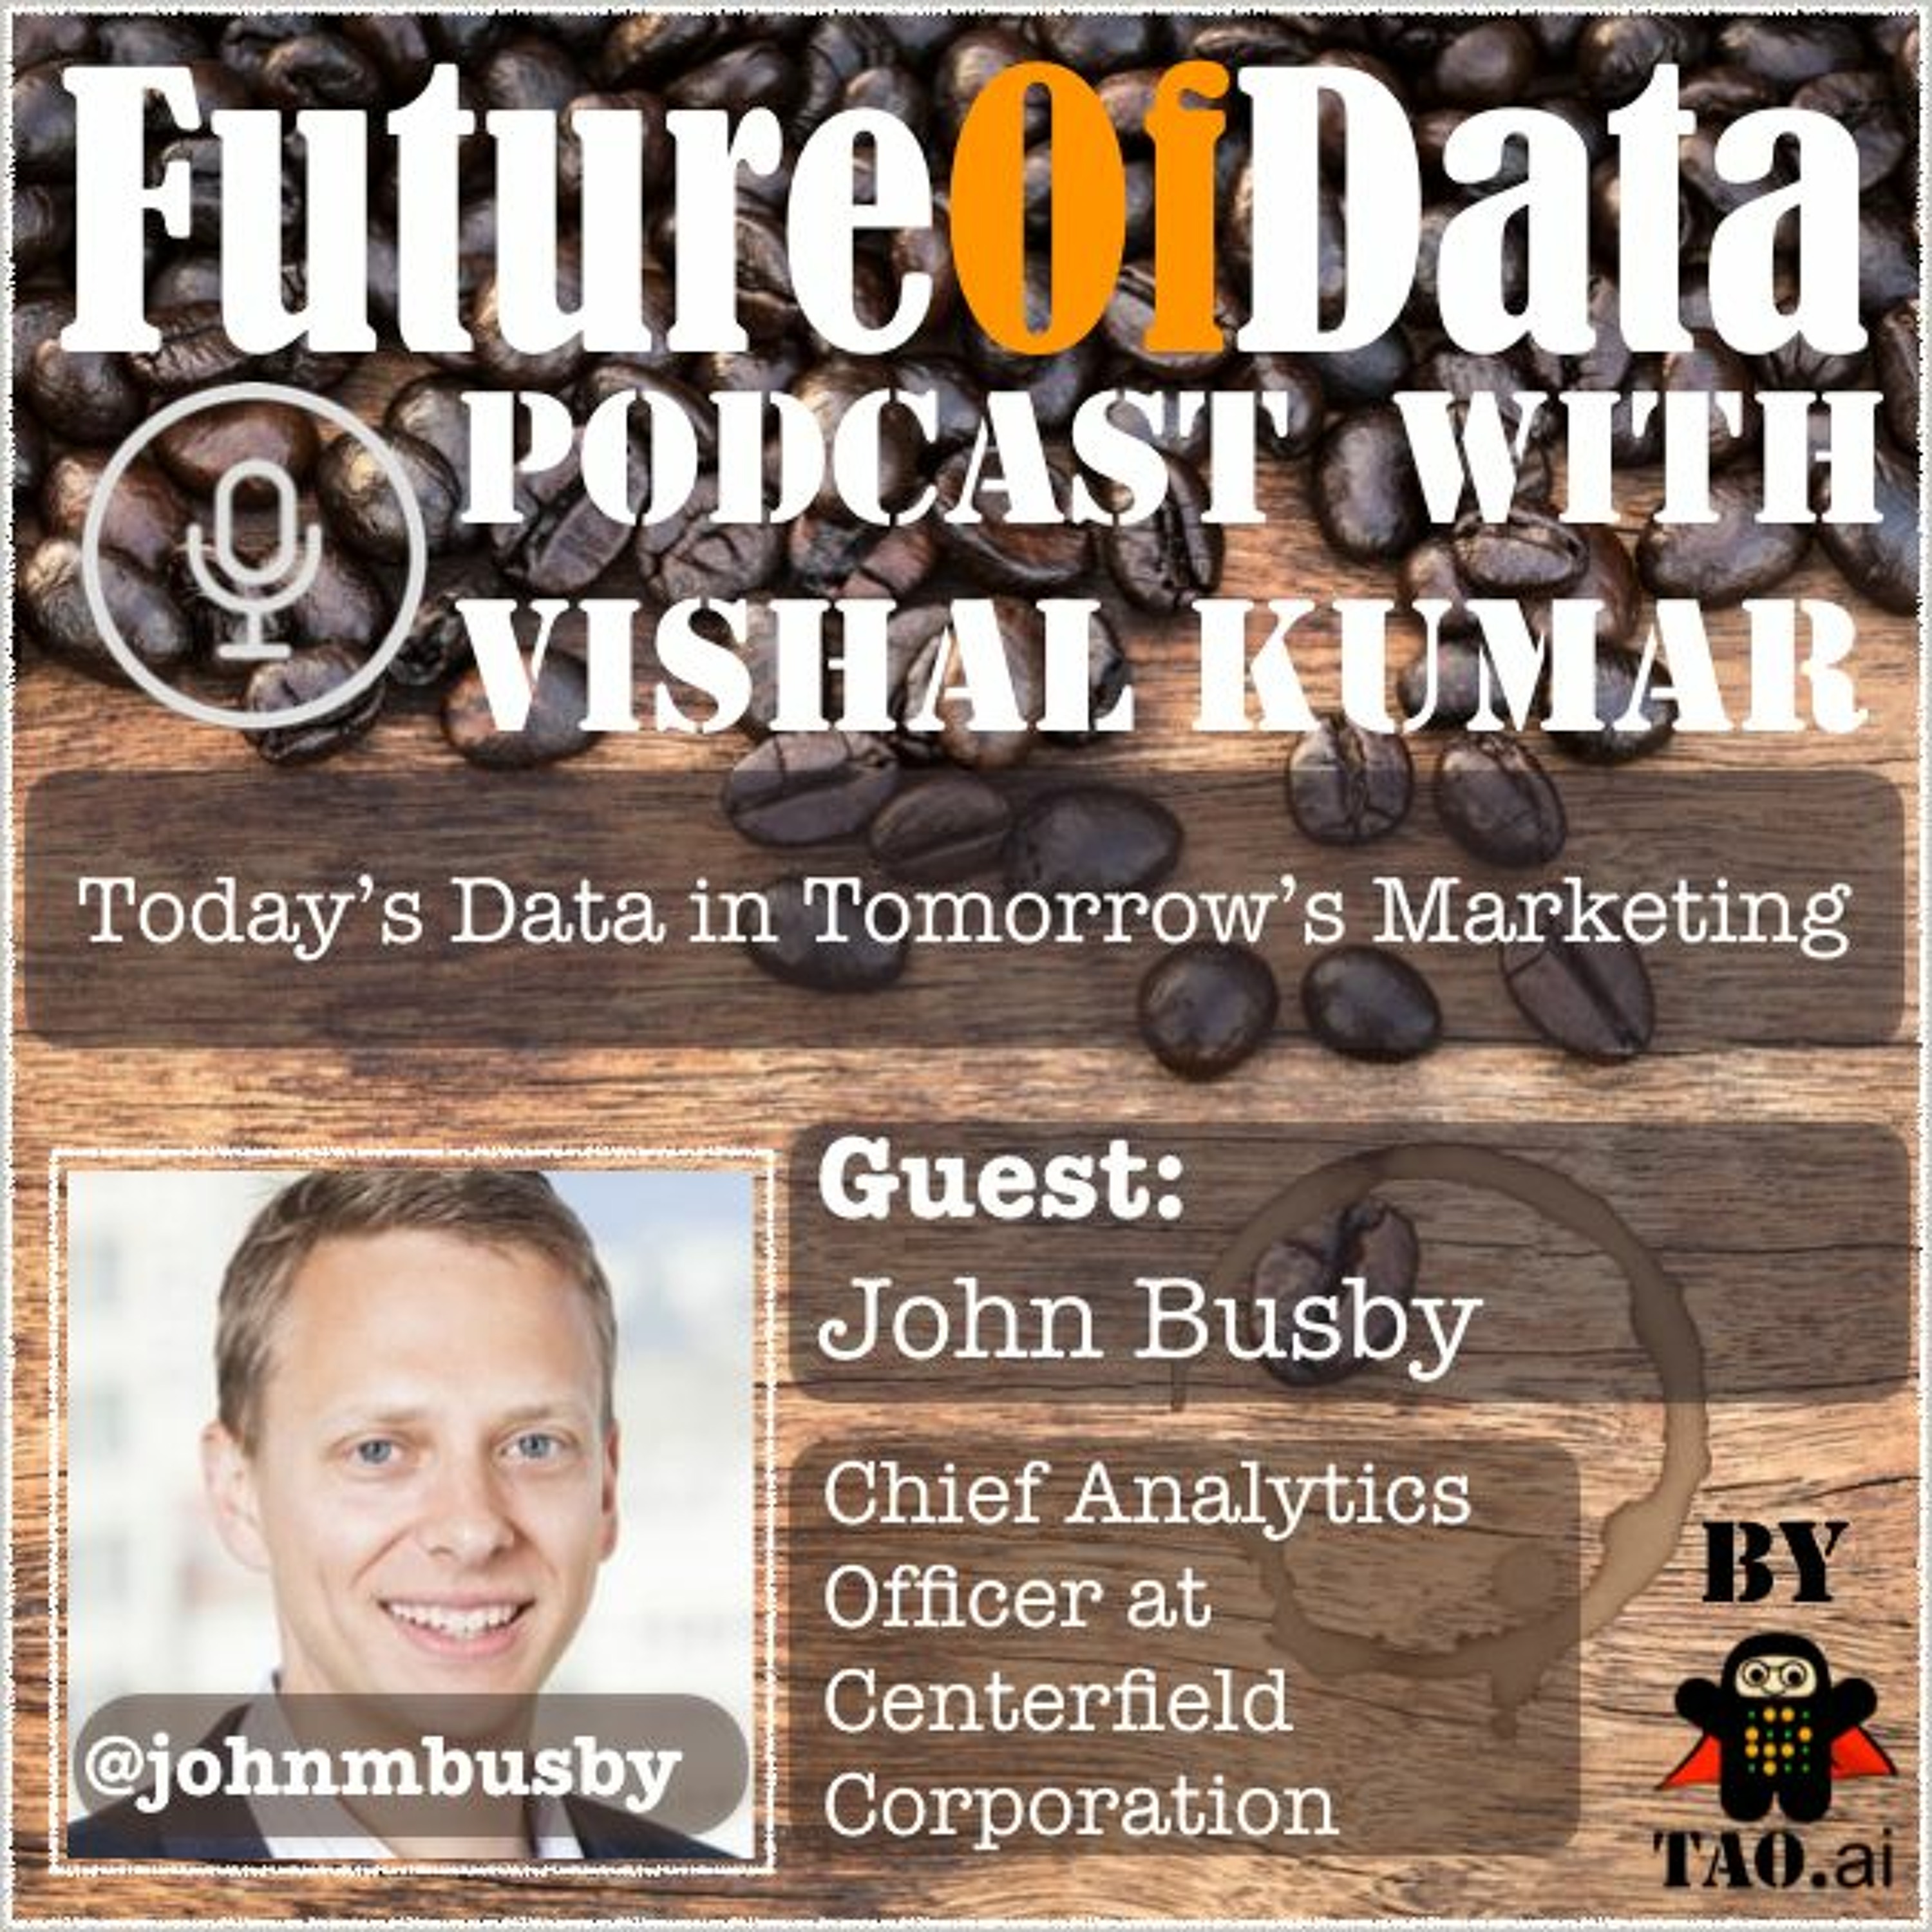 #Data today shaping #digital #Marketing of #tomorrow @JohnMBusby @CenterfieldUSA